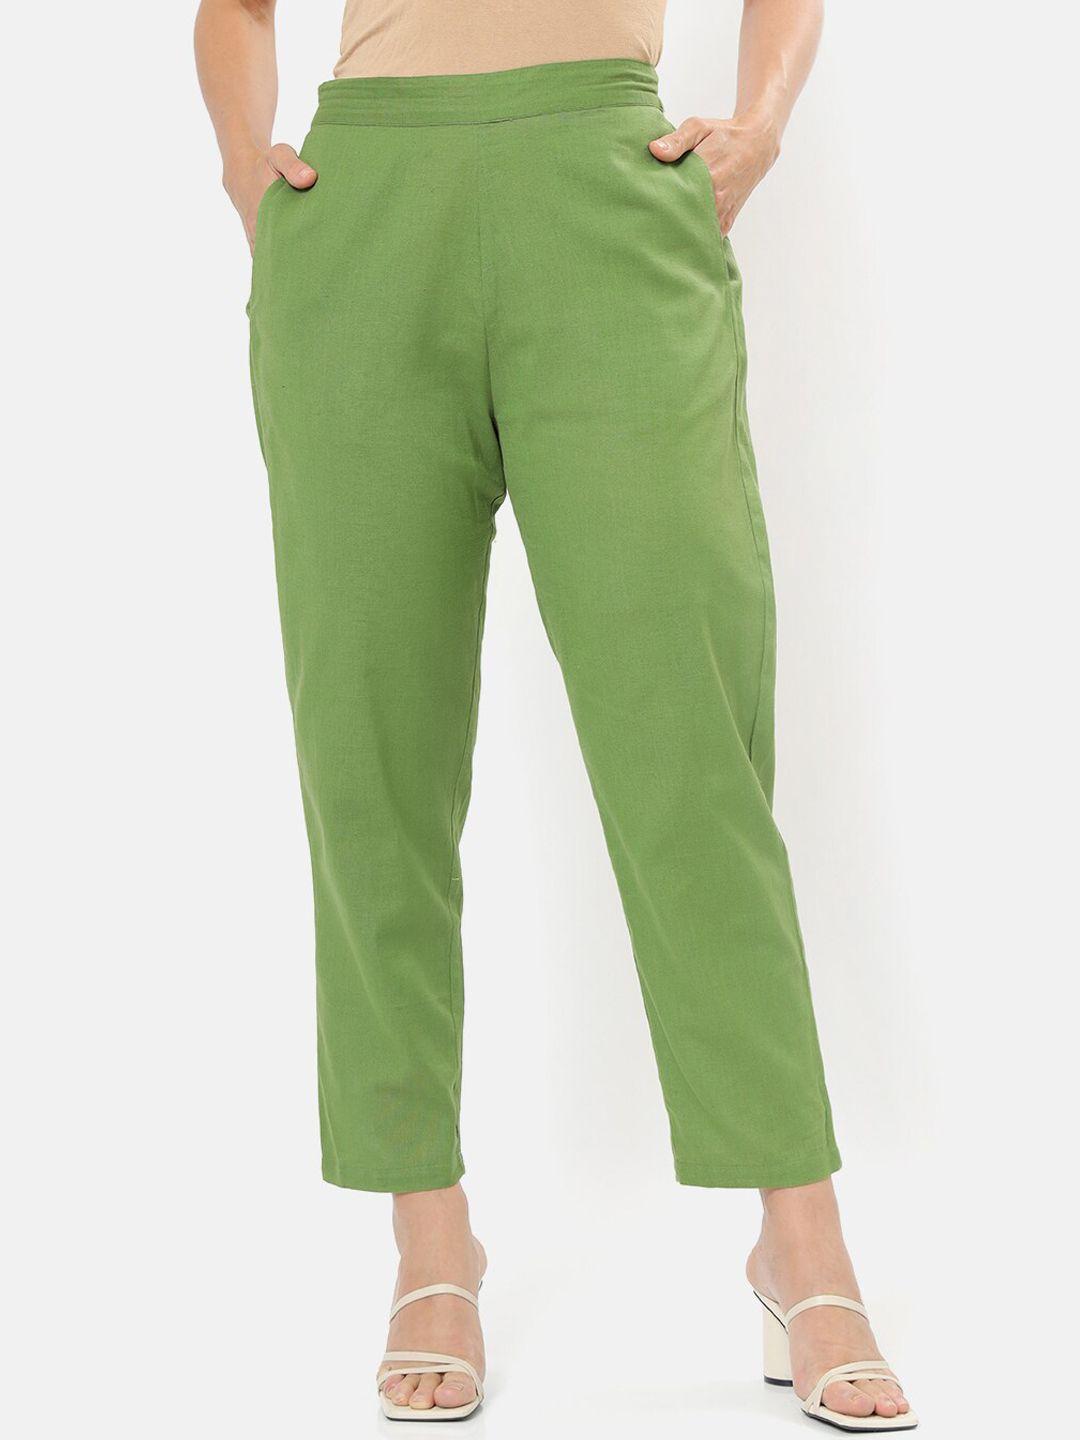 saaki women olive green trousers